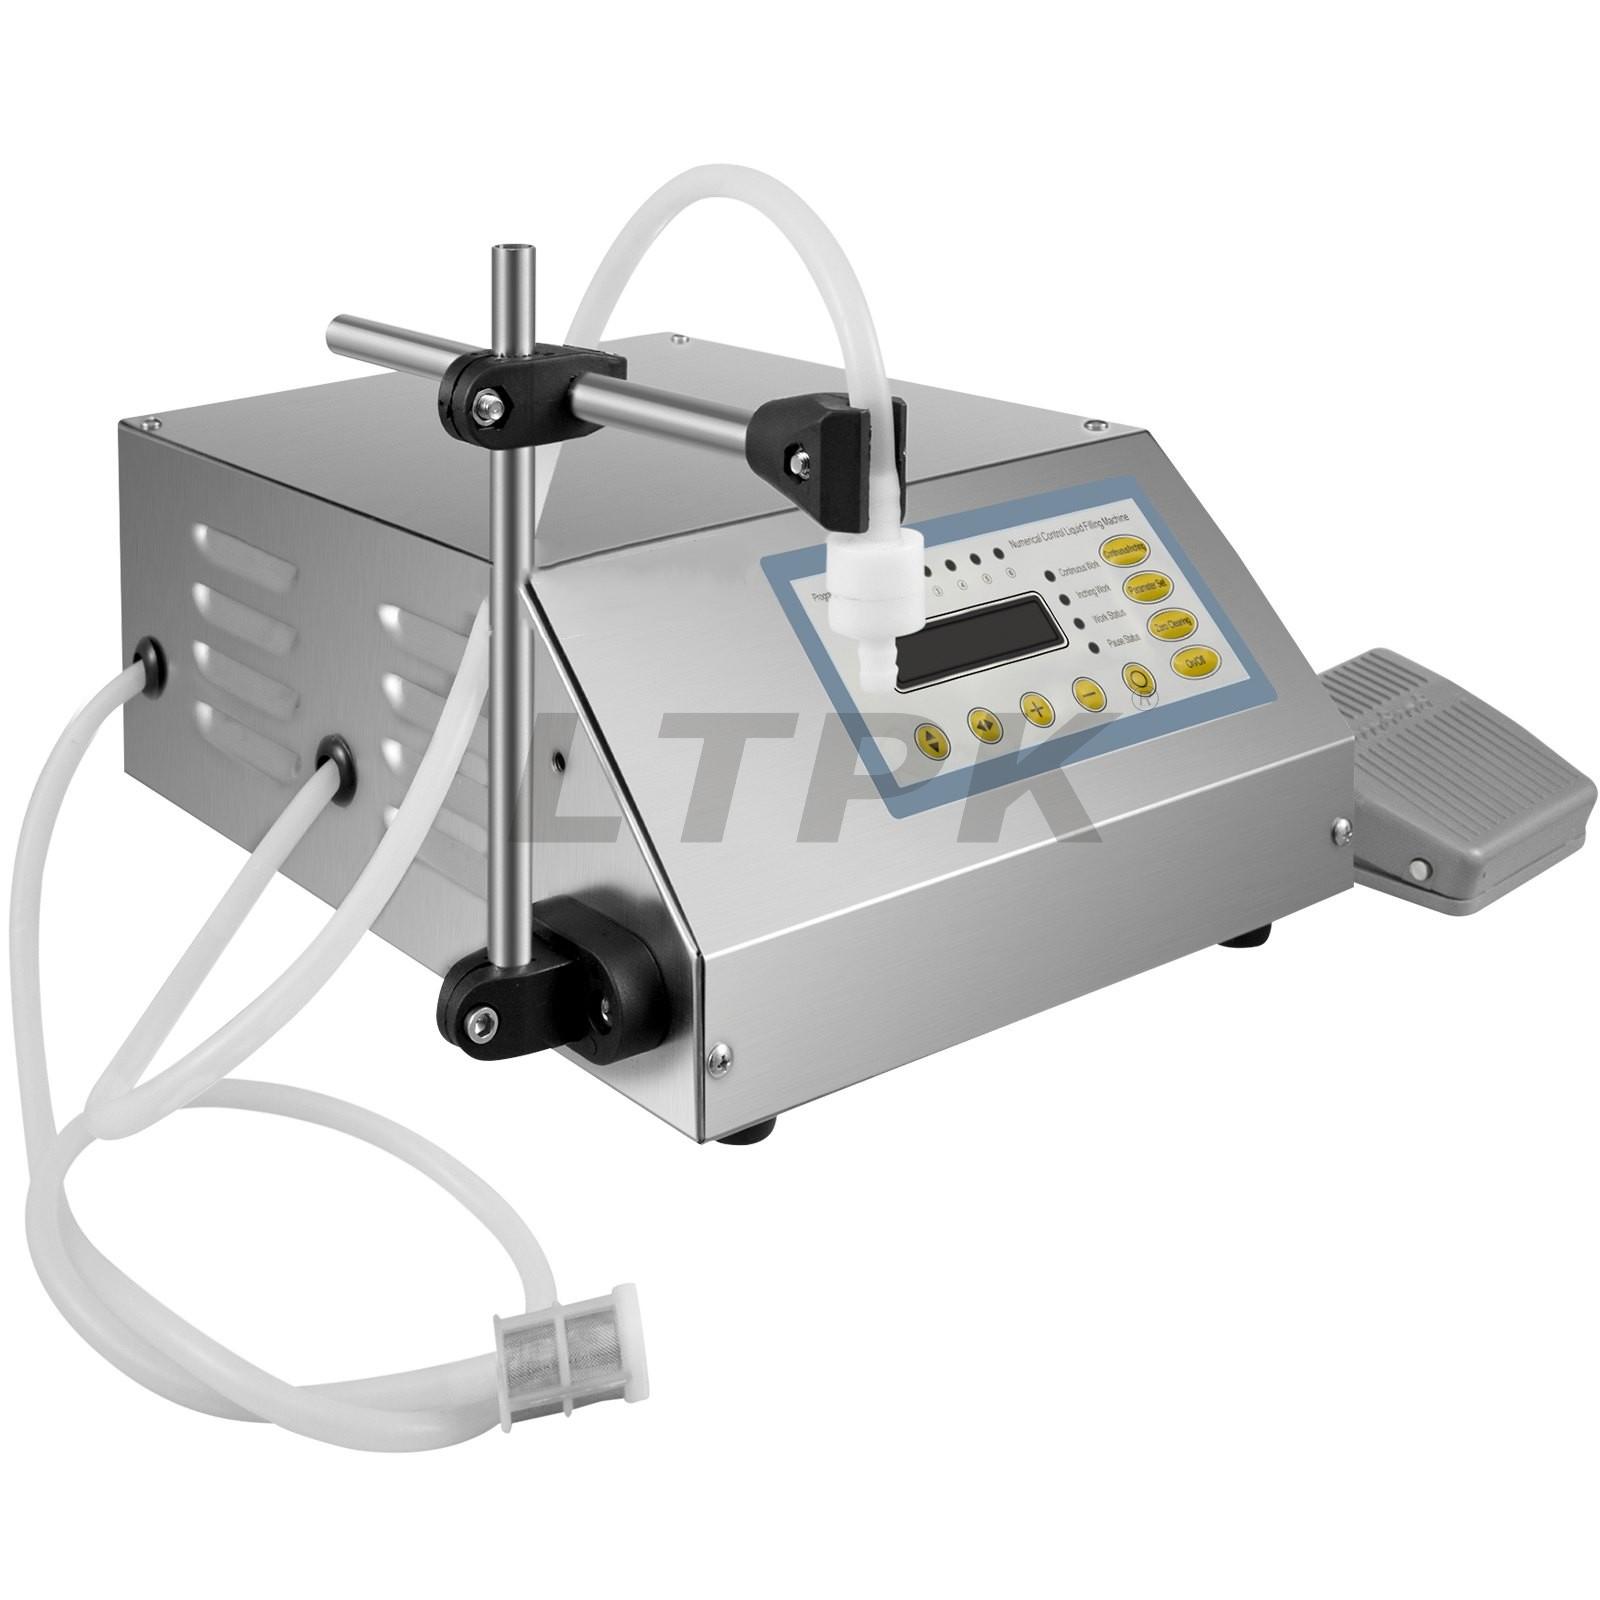 LTPK GFK160 2-3500ml Digital Control Pump Liquid Filling Machine 